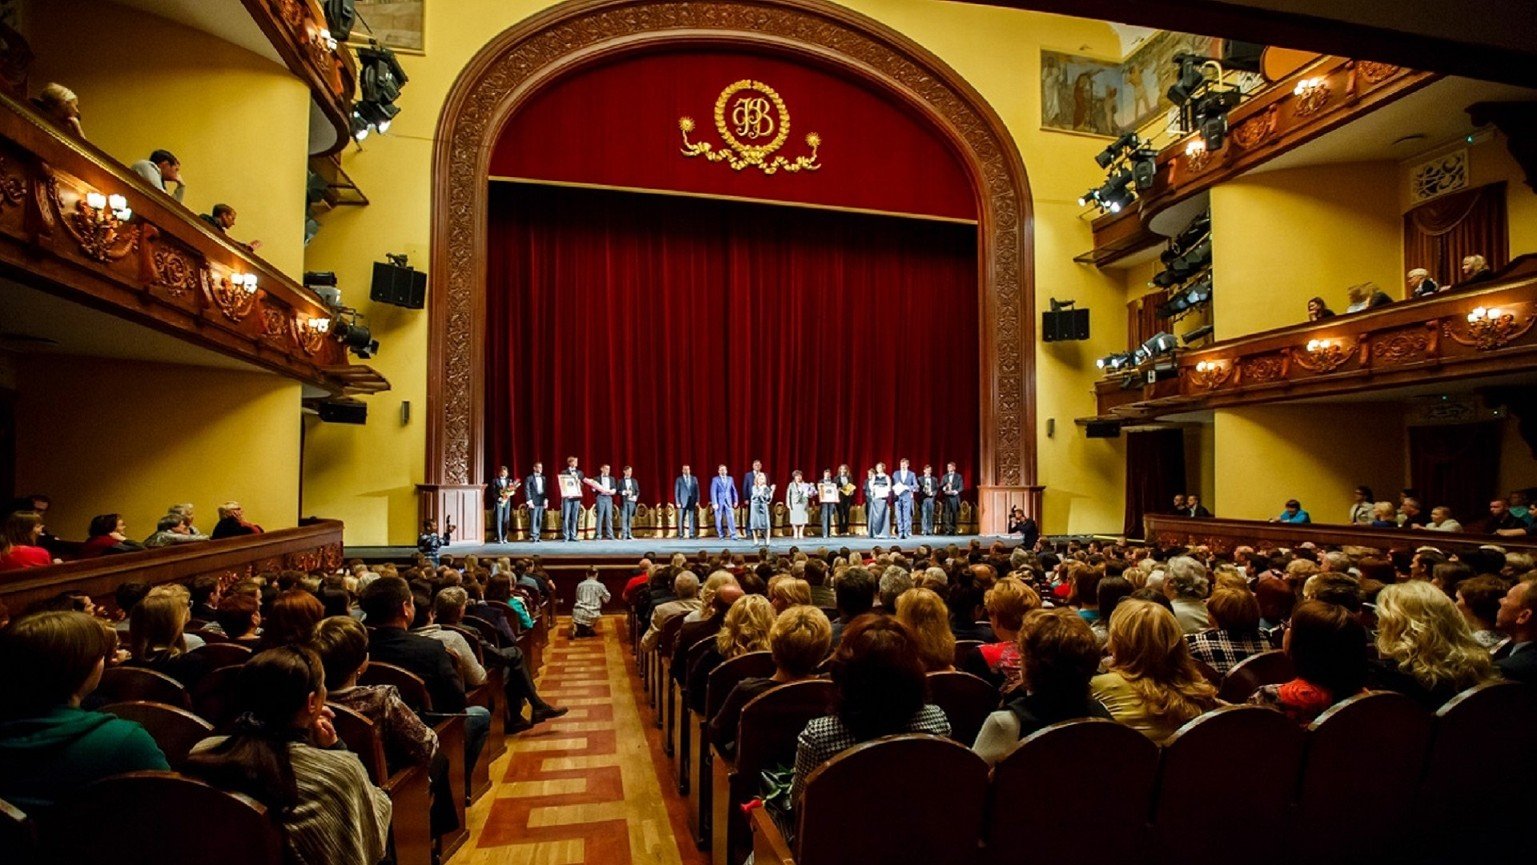 театр имени акимова зал